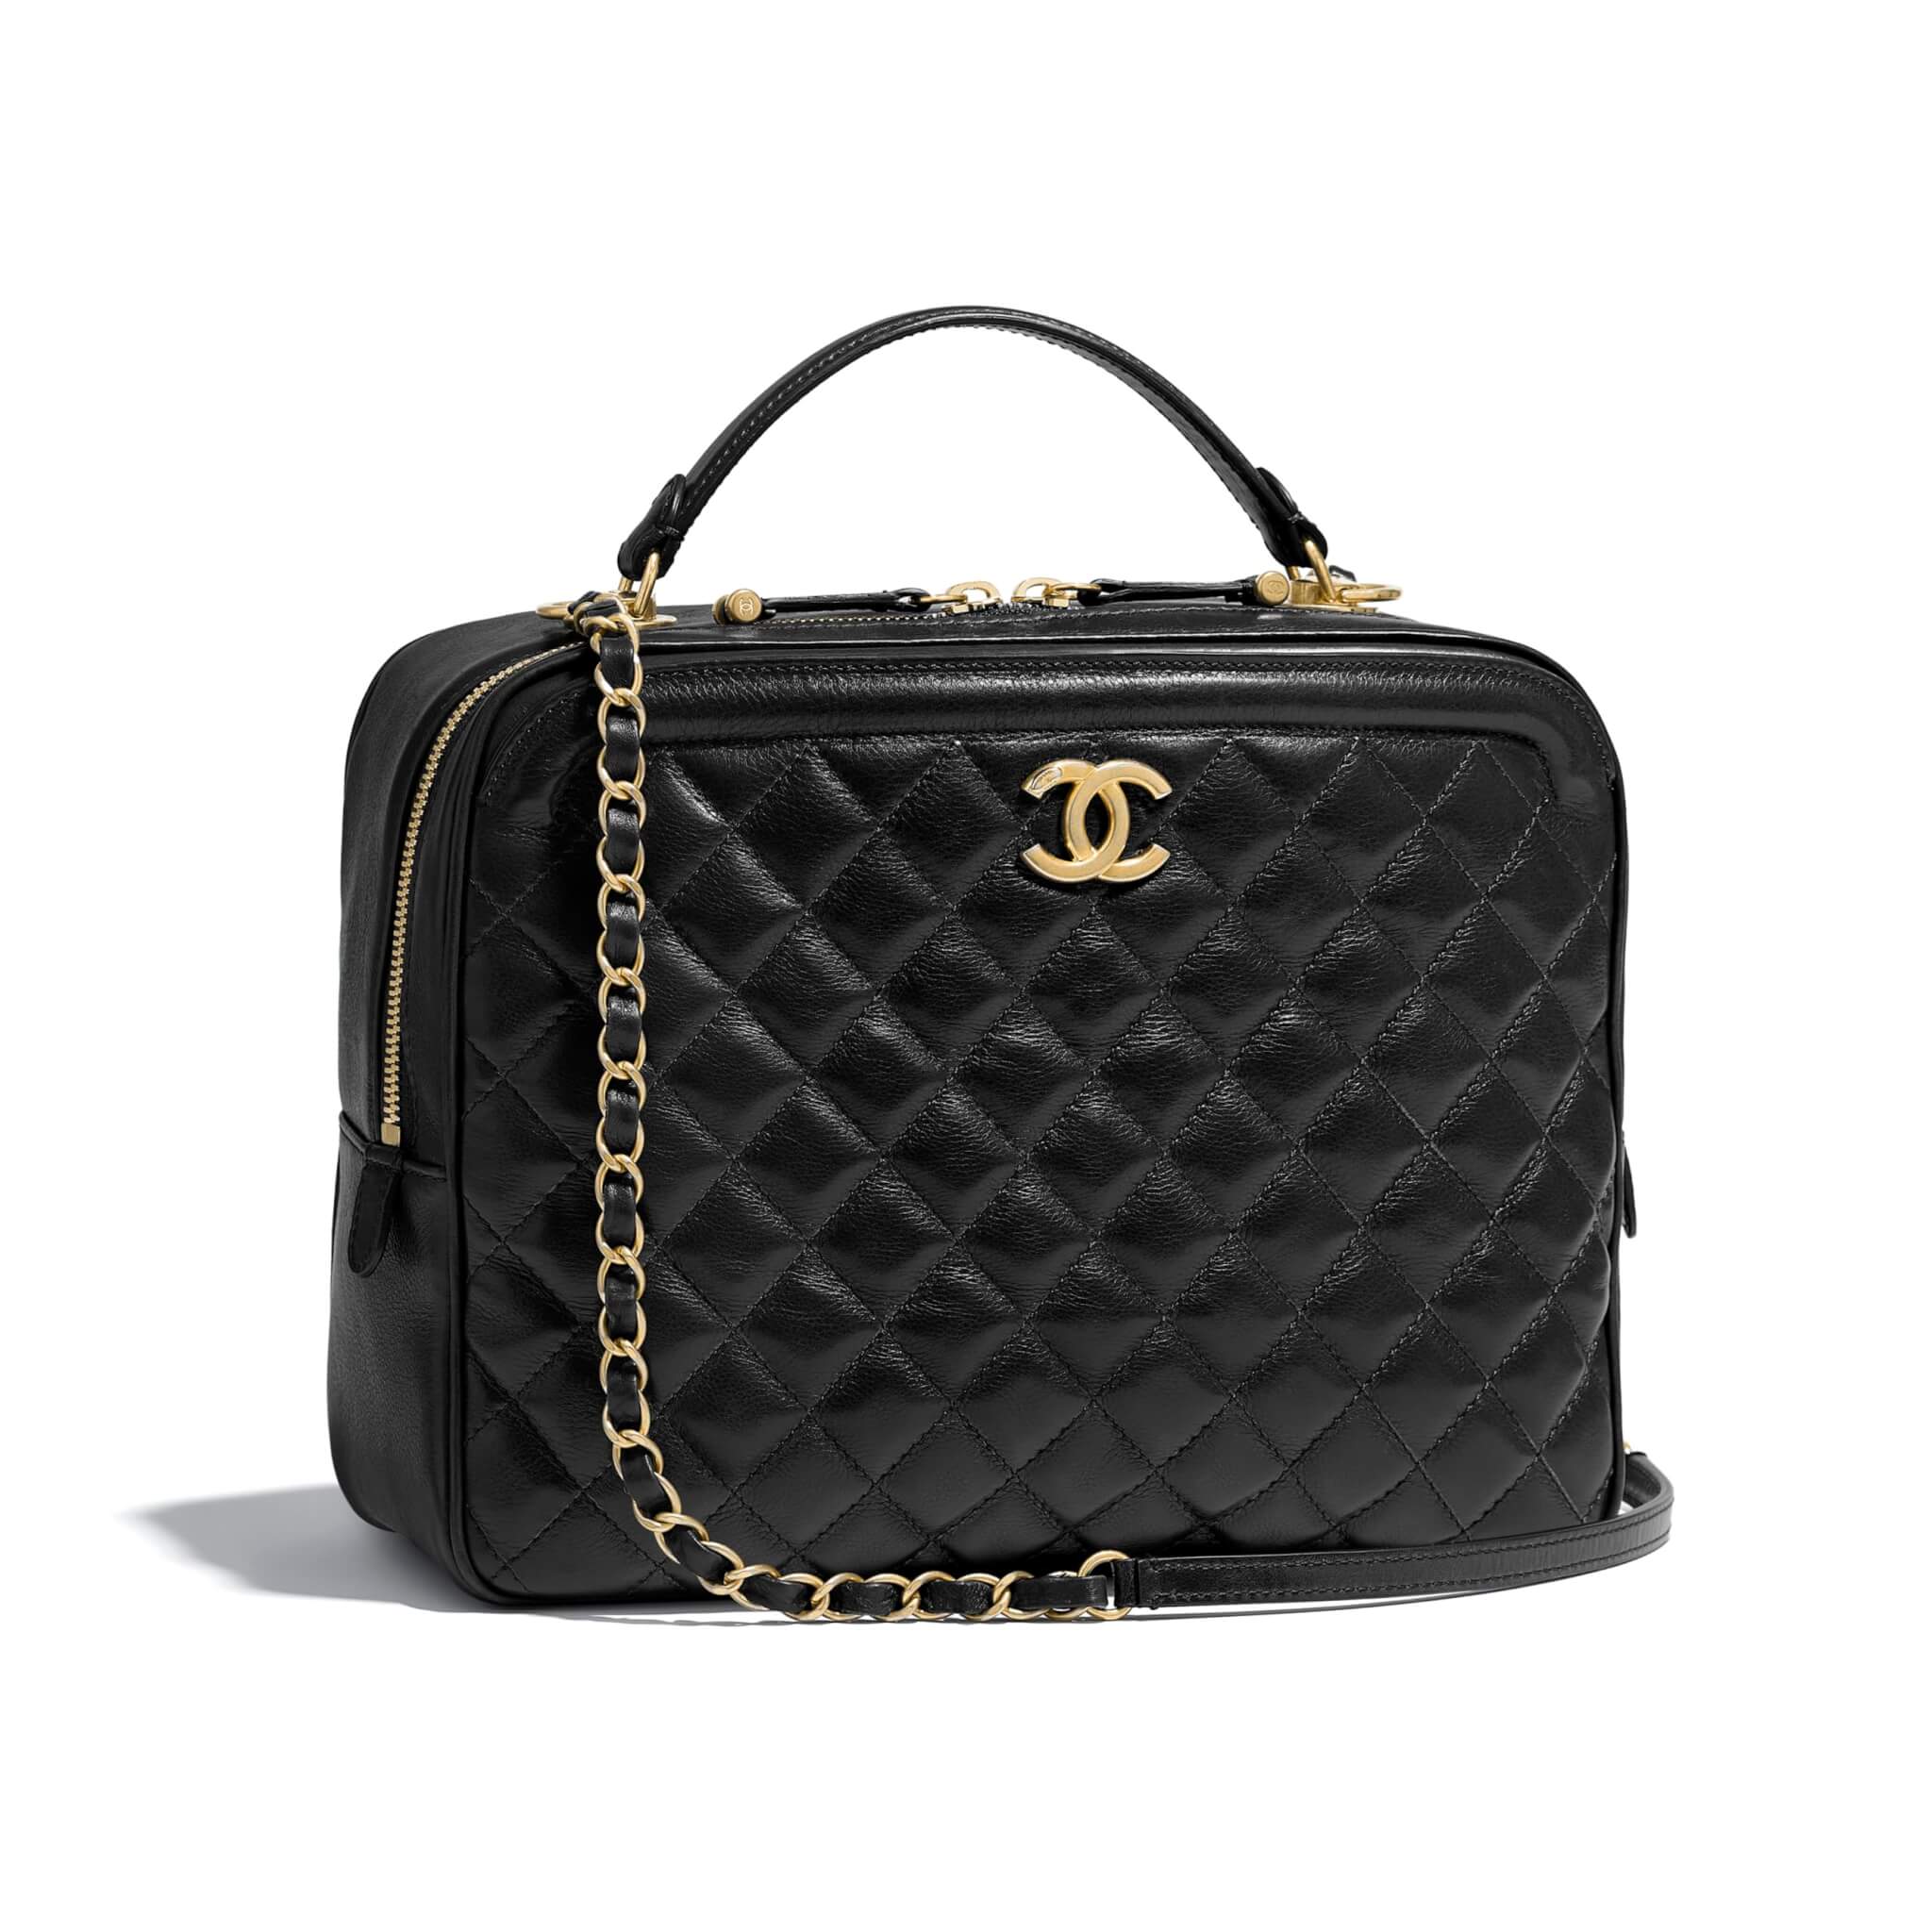 Chanel's Vanity Bag: Size Comparison & Fit - BagAddicts Anonymous